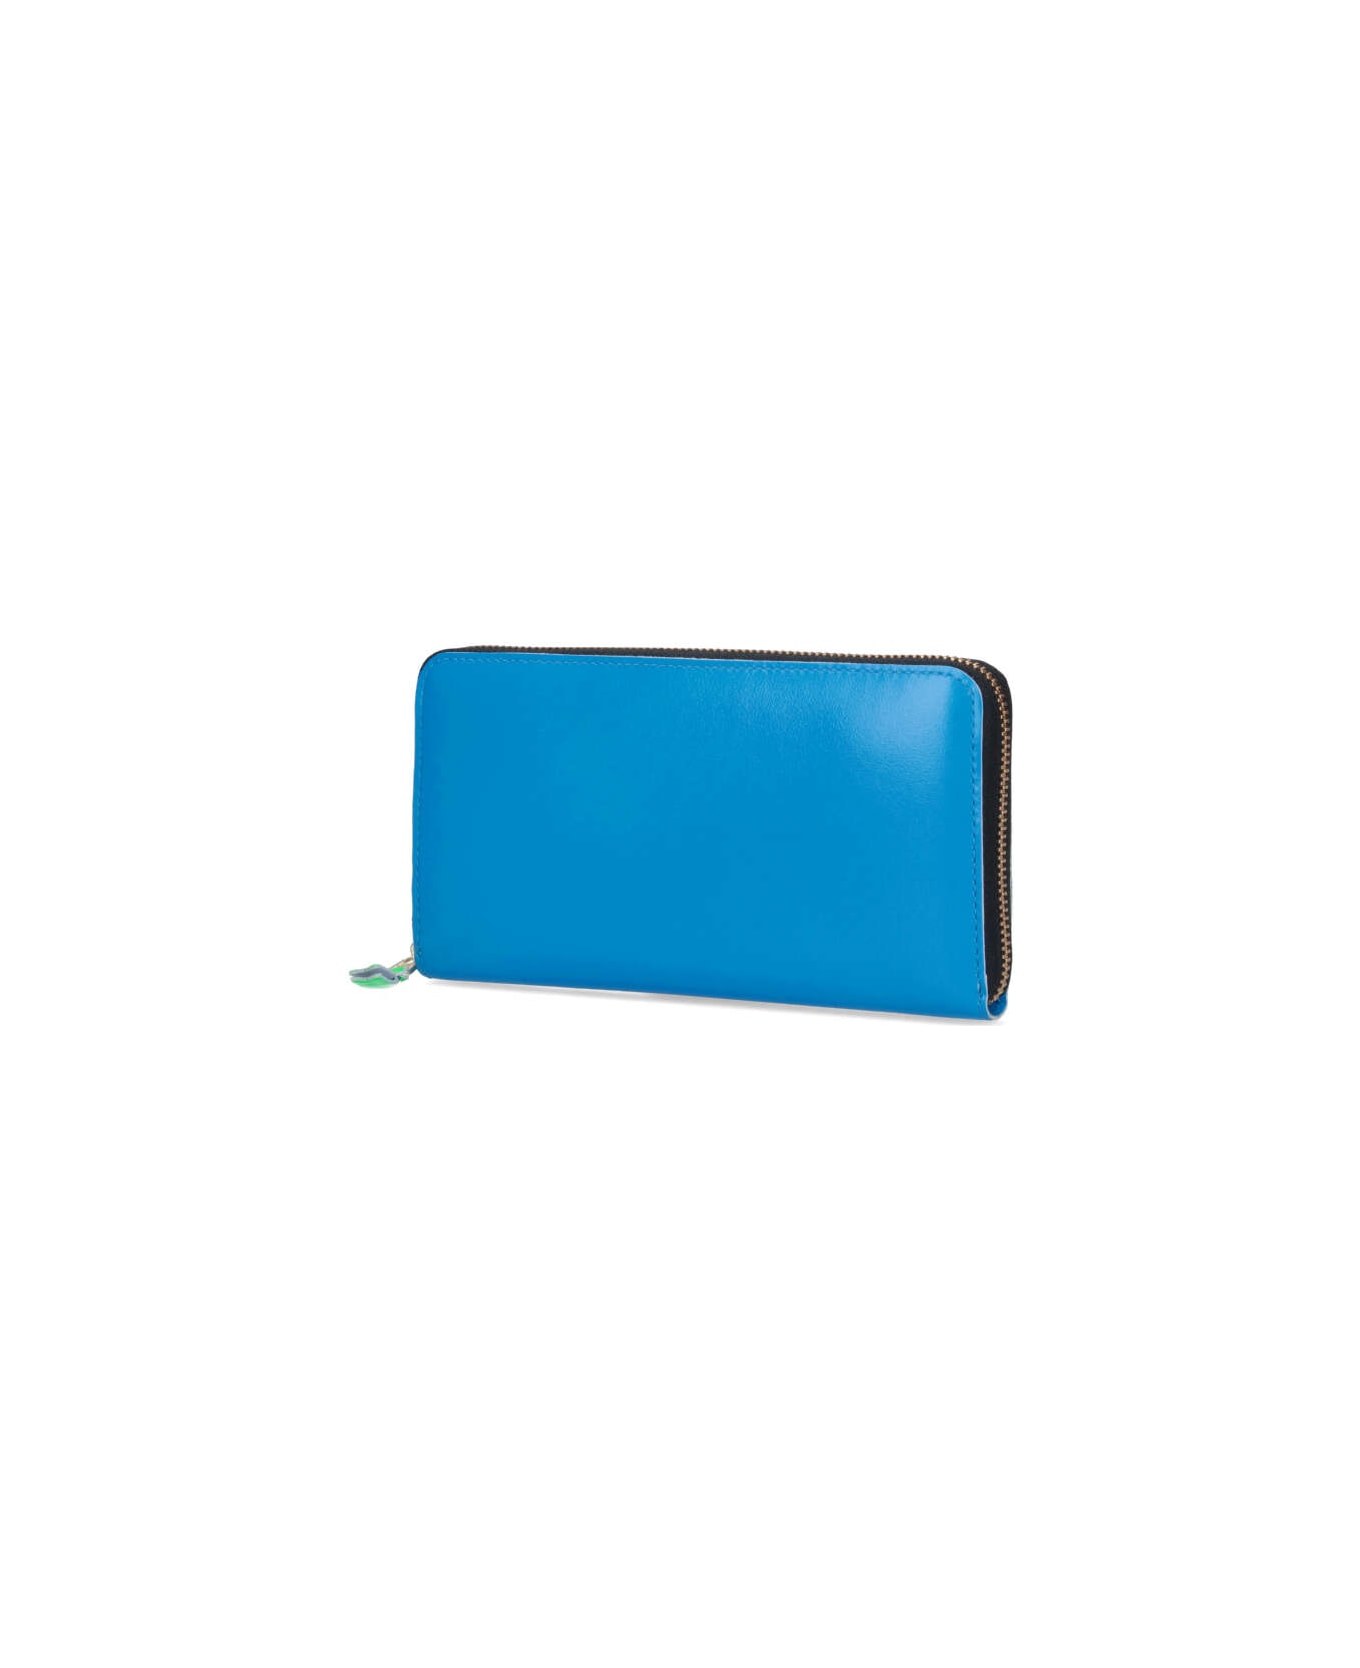 Comme des Garçons Wallet Super Fluo Zipper Wallet - Blue